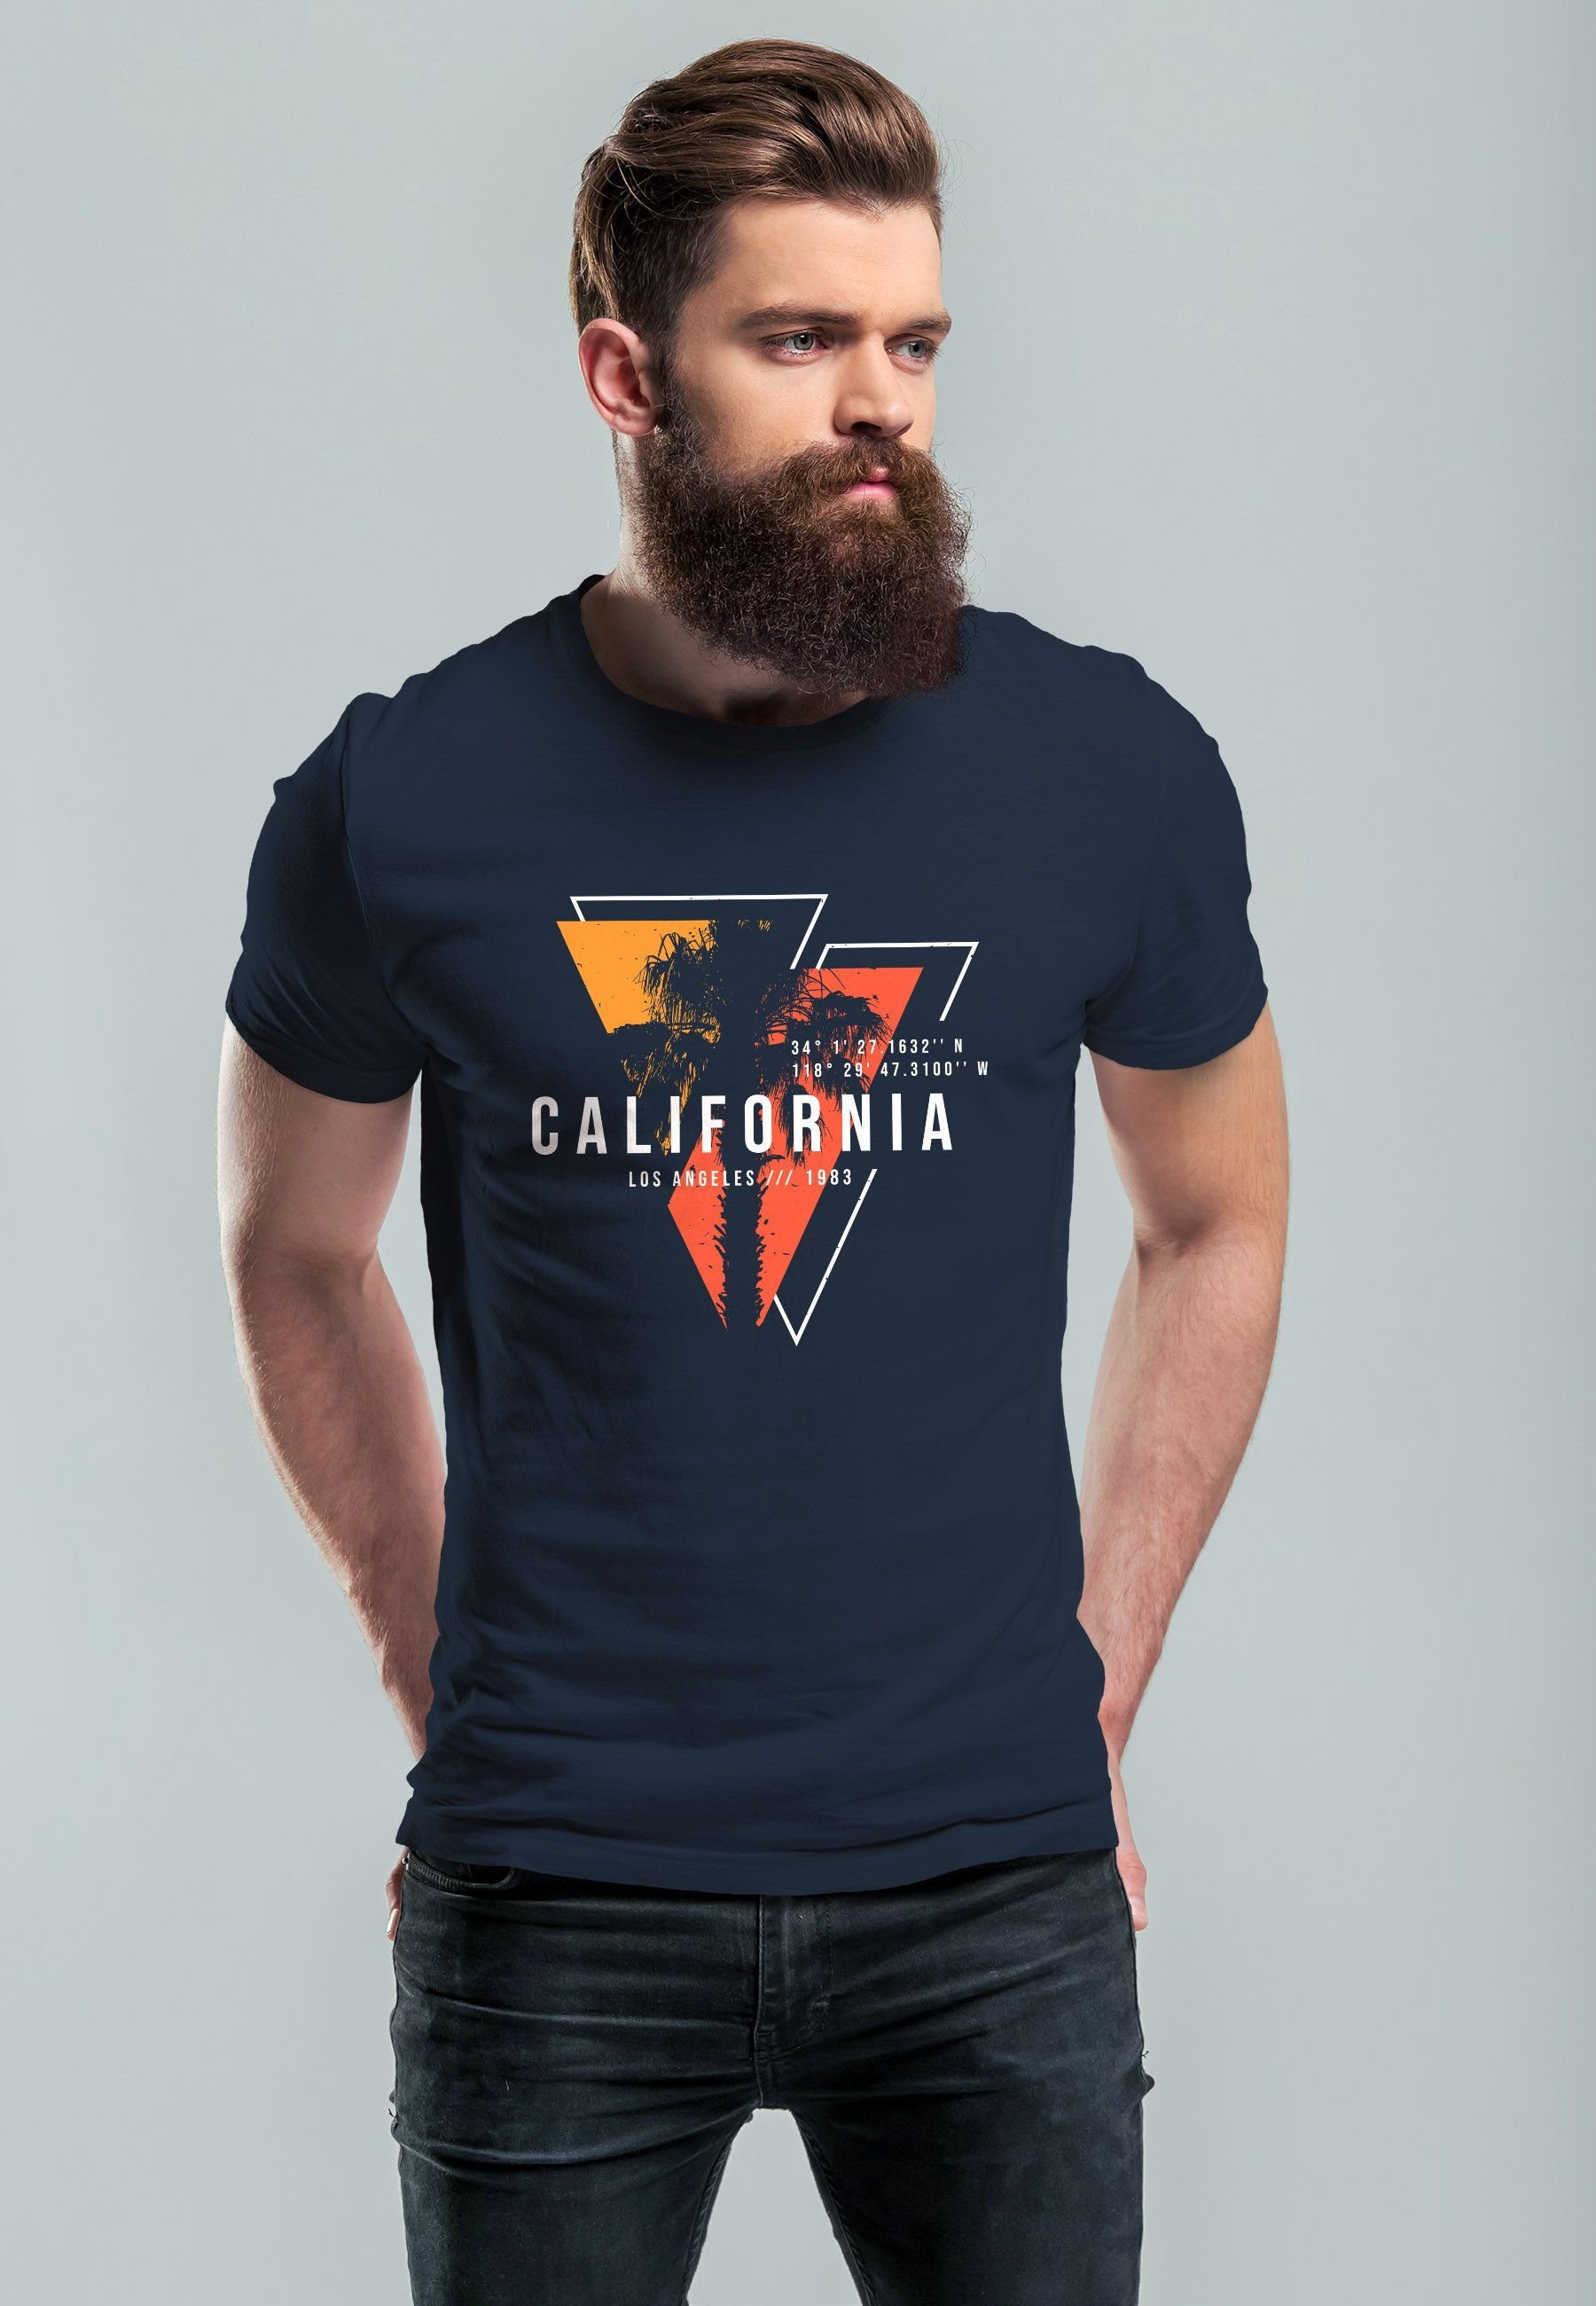 USA mit Print Fashion Herren Neverless Motiv Print-Shirt Surfing Angeles navy-gelb Los T-Shirt California Sommer